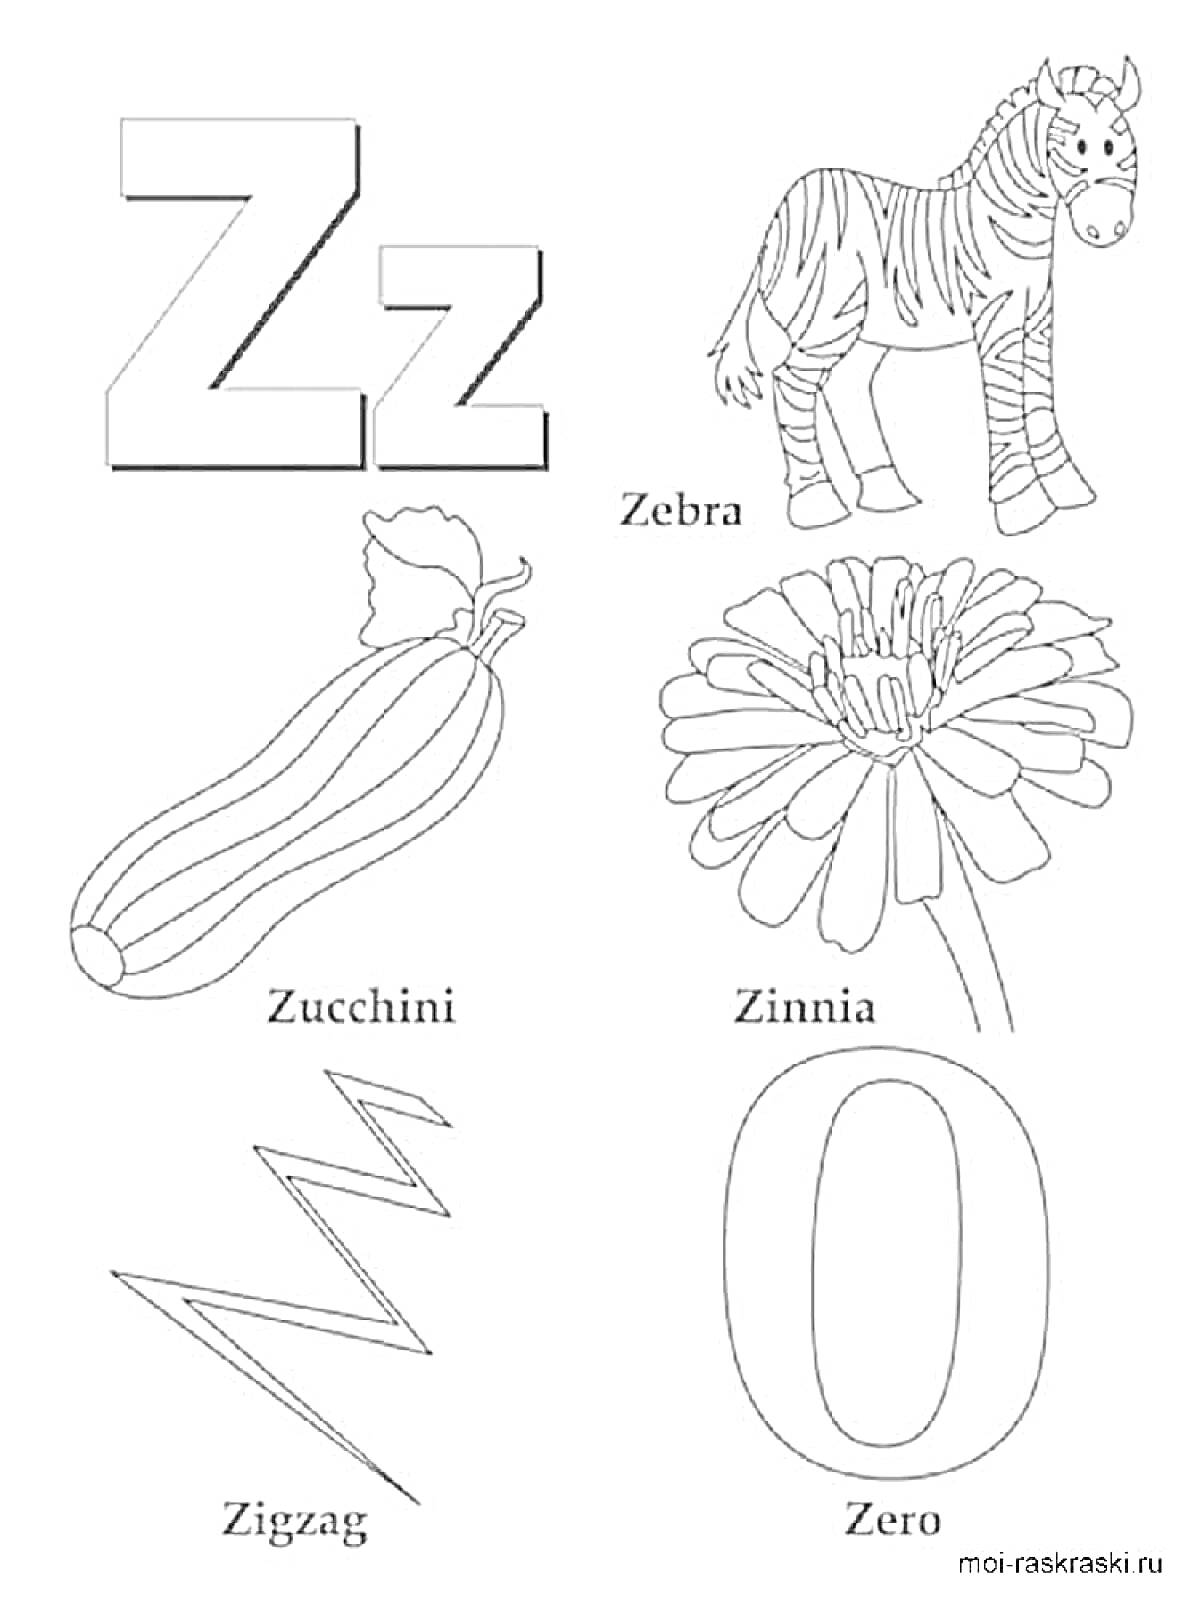 Английский алфавит - буква Z с изображениями и подписями Zebra, Zucchini, Zinnia, Zigzag, Zero